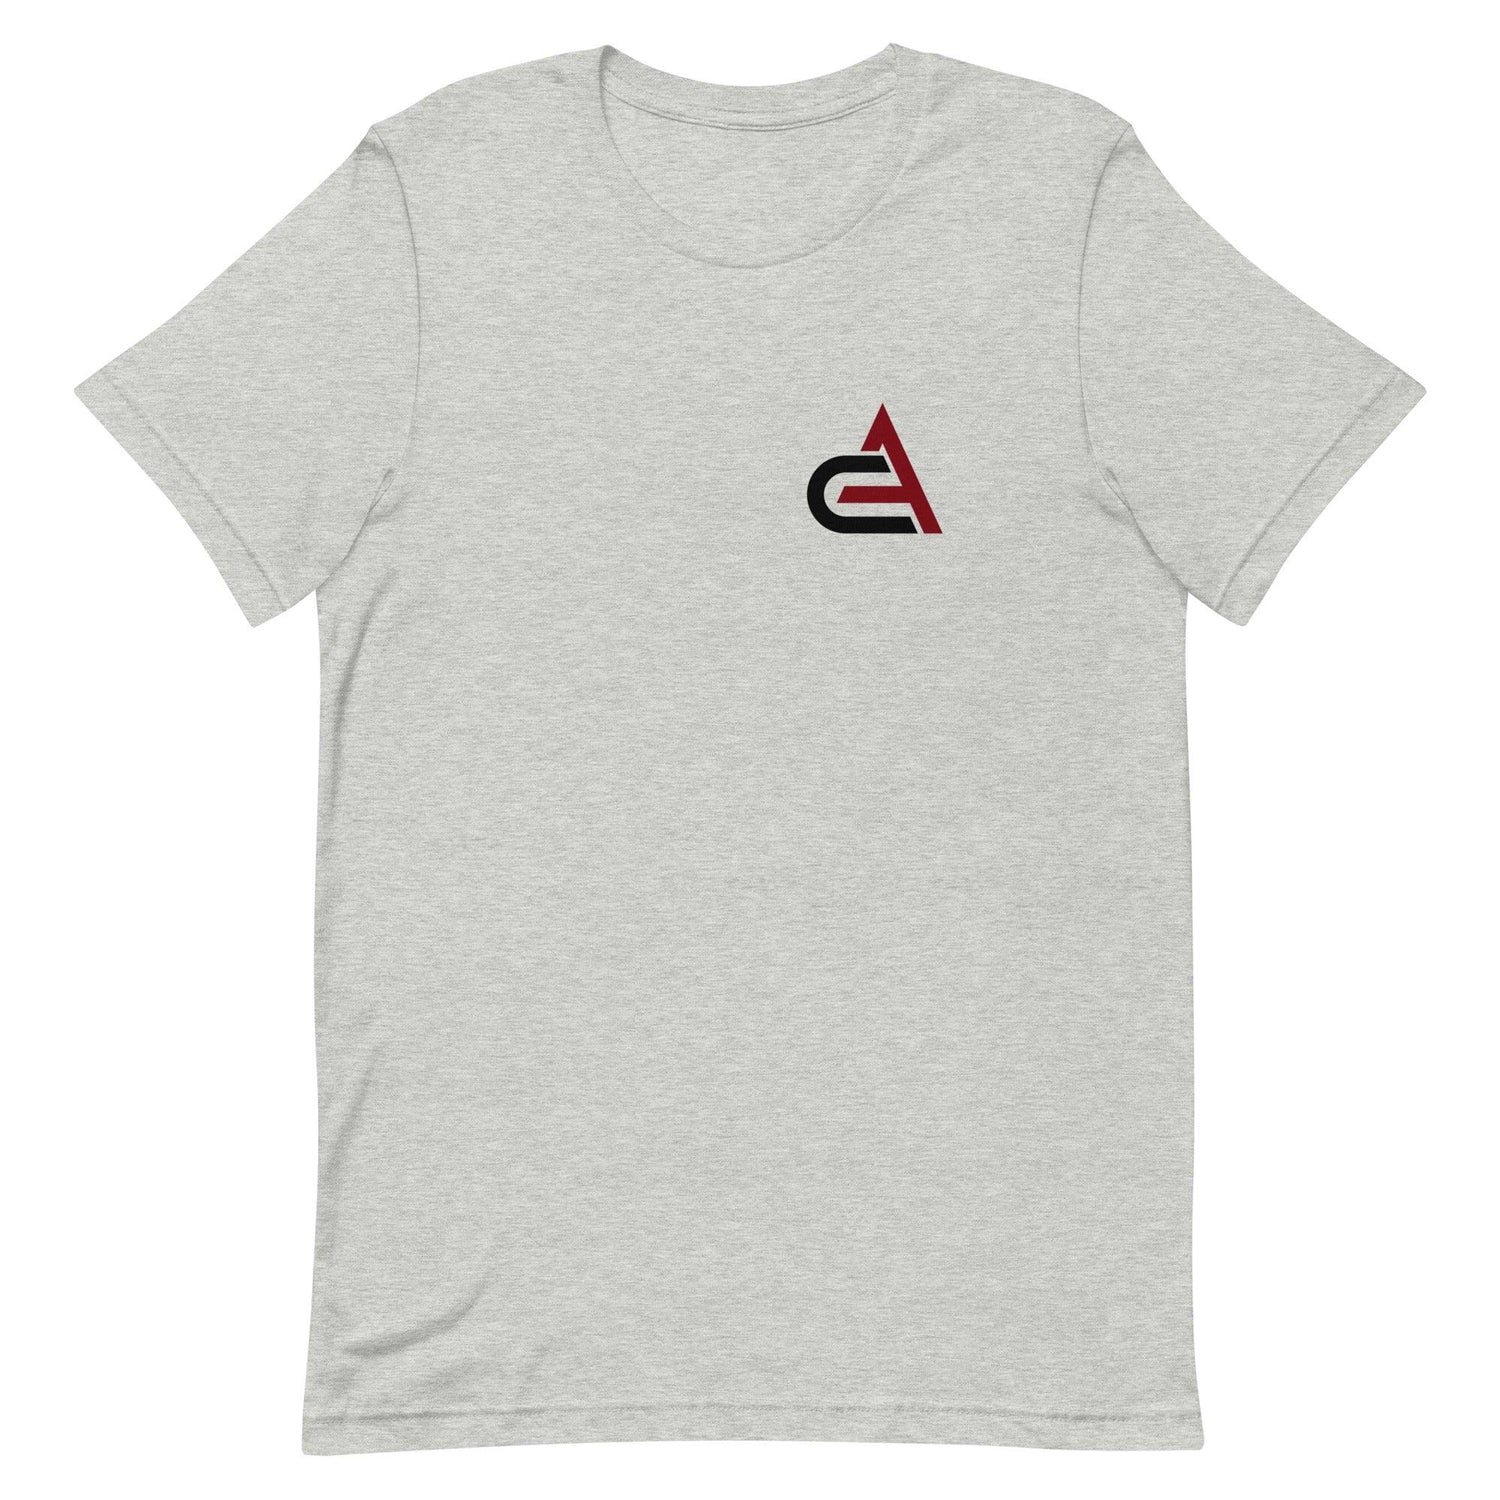 Cade Austin "Elite" t-shirt - Fan Arch